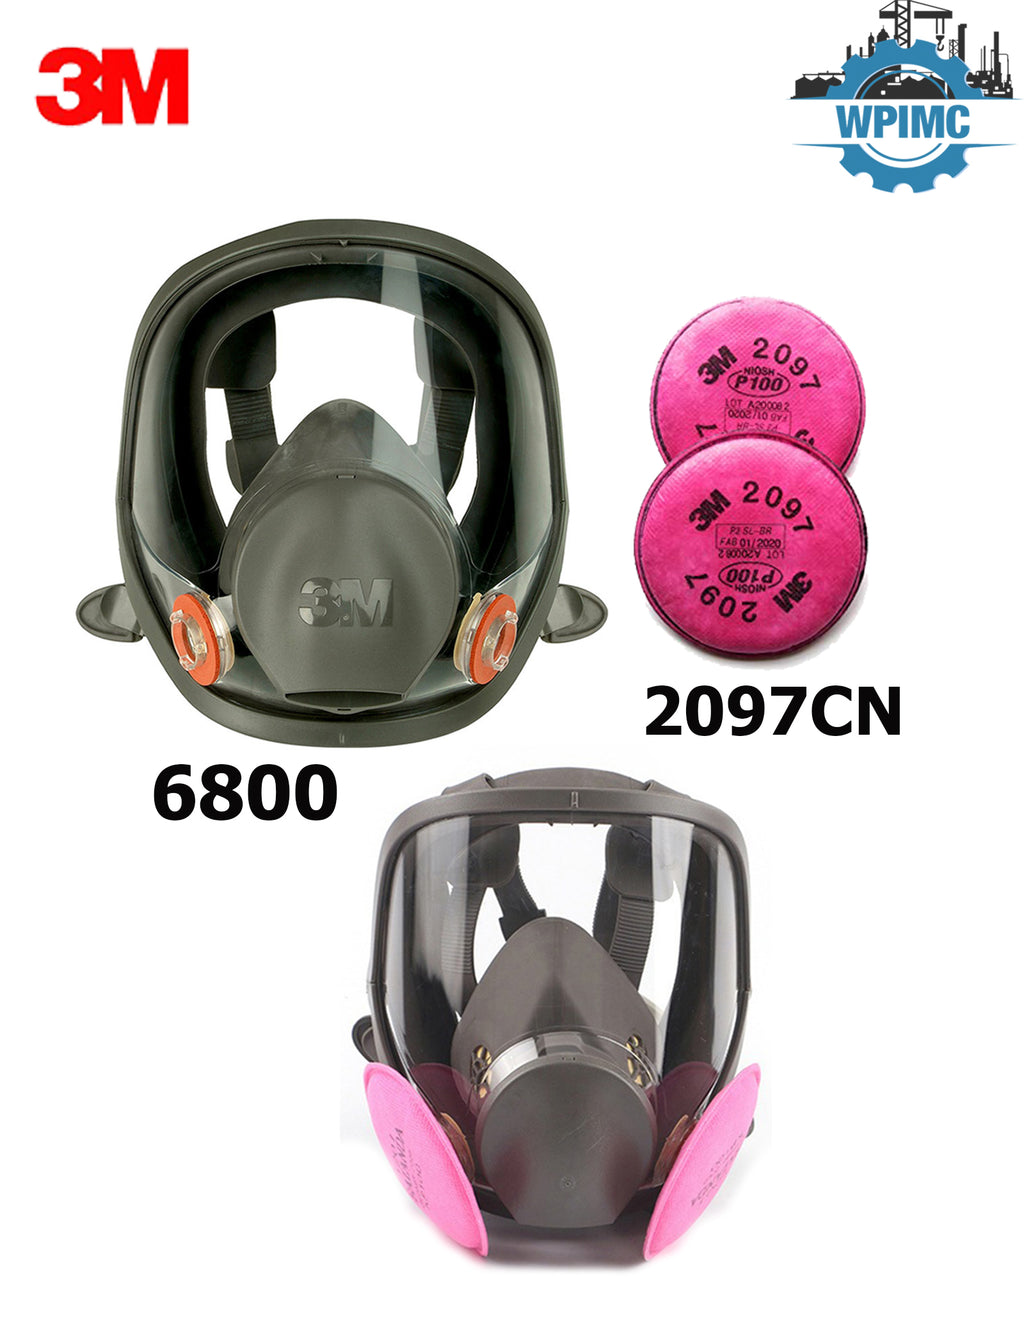 3M 6800 Mask + 2097CN